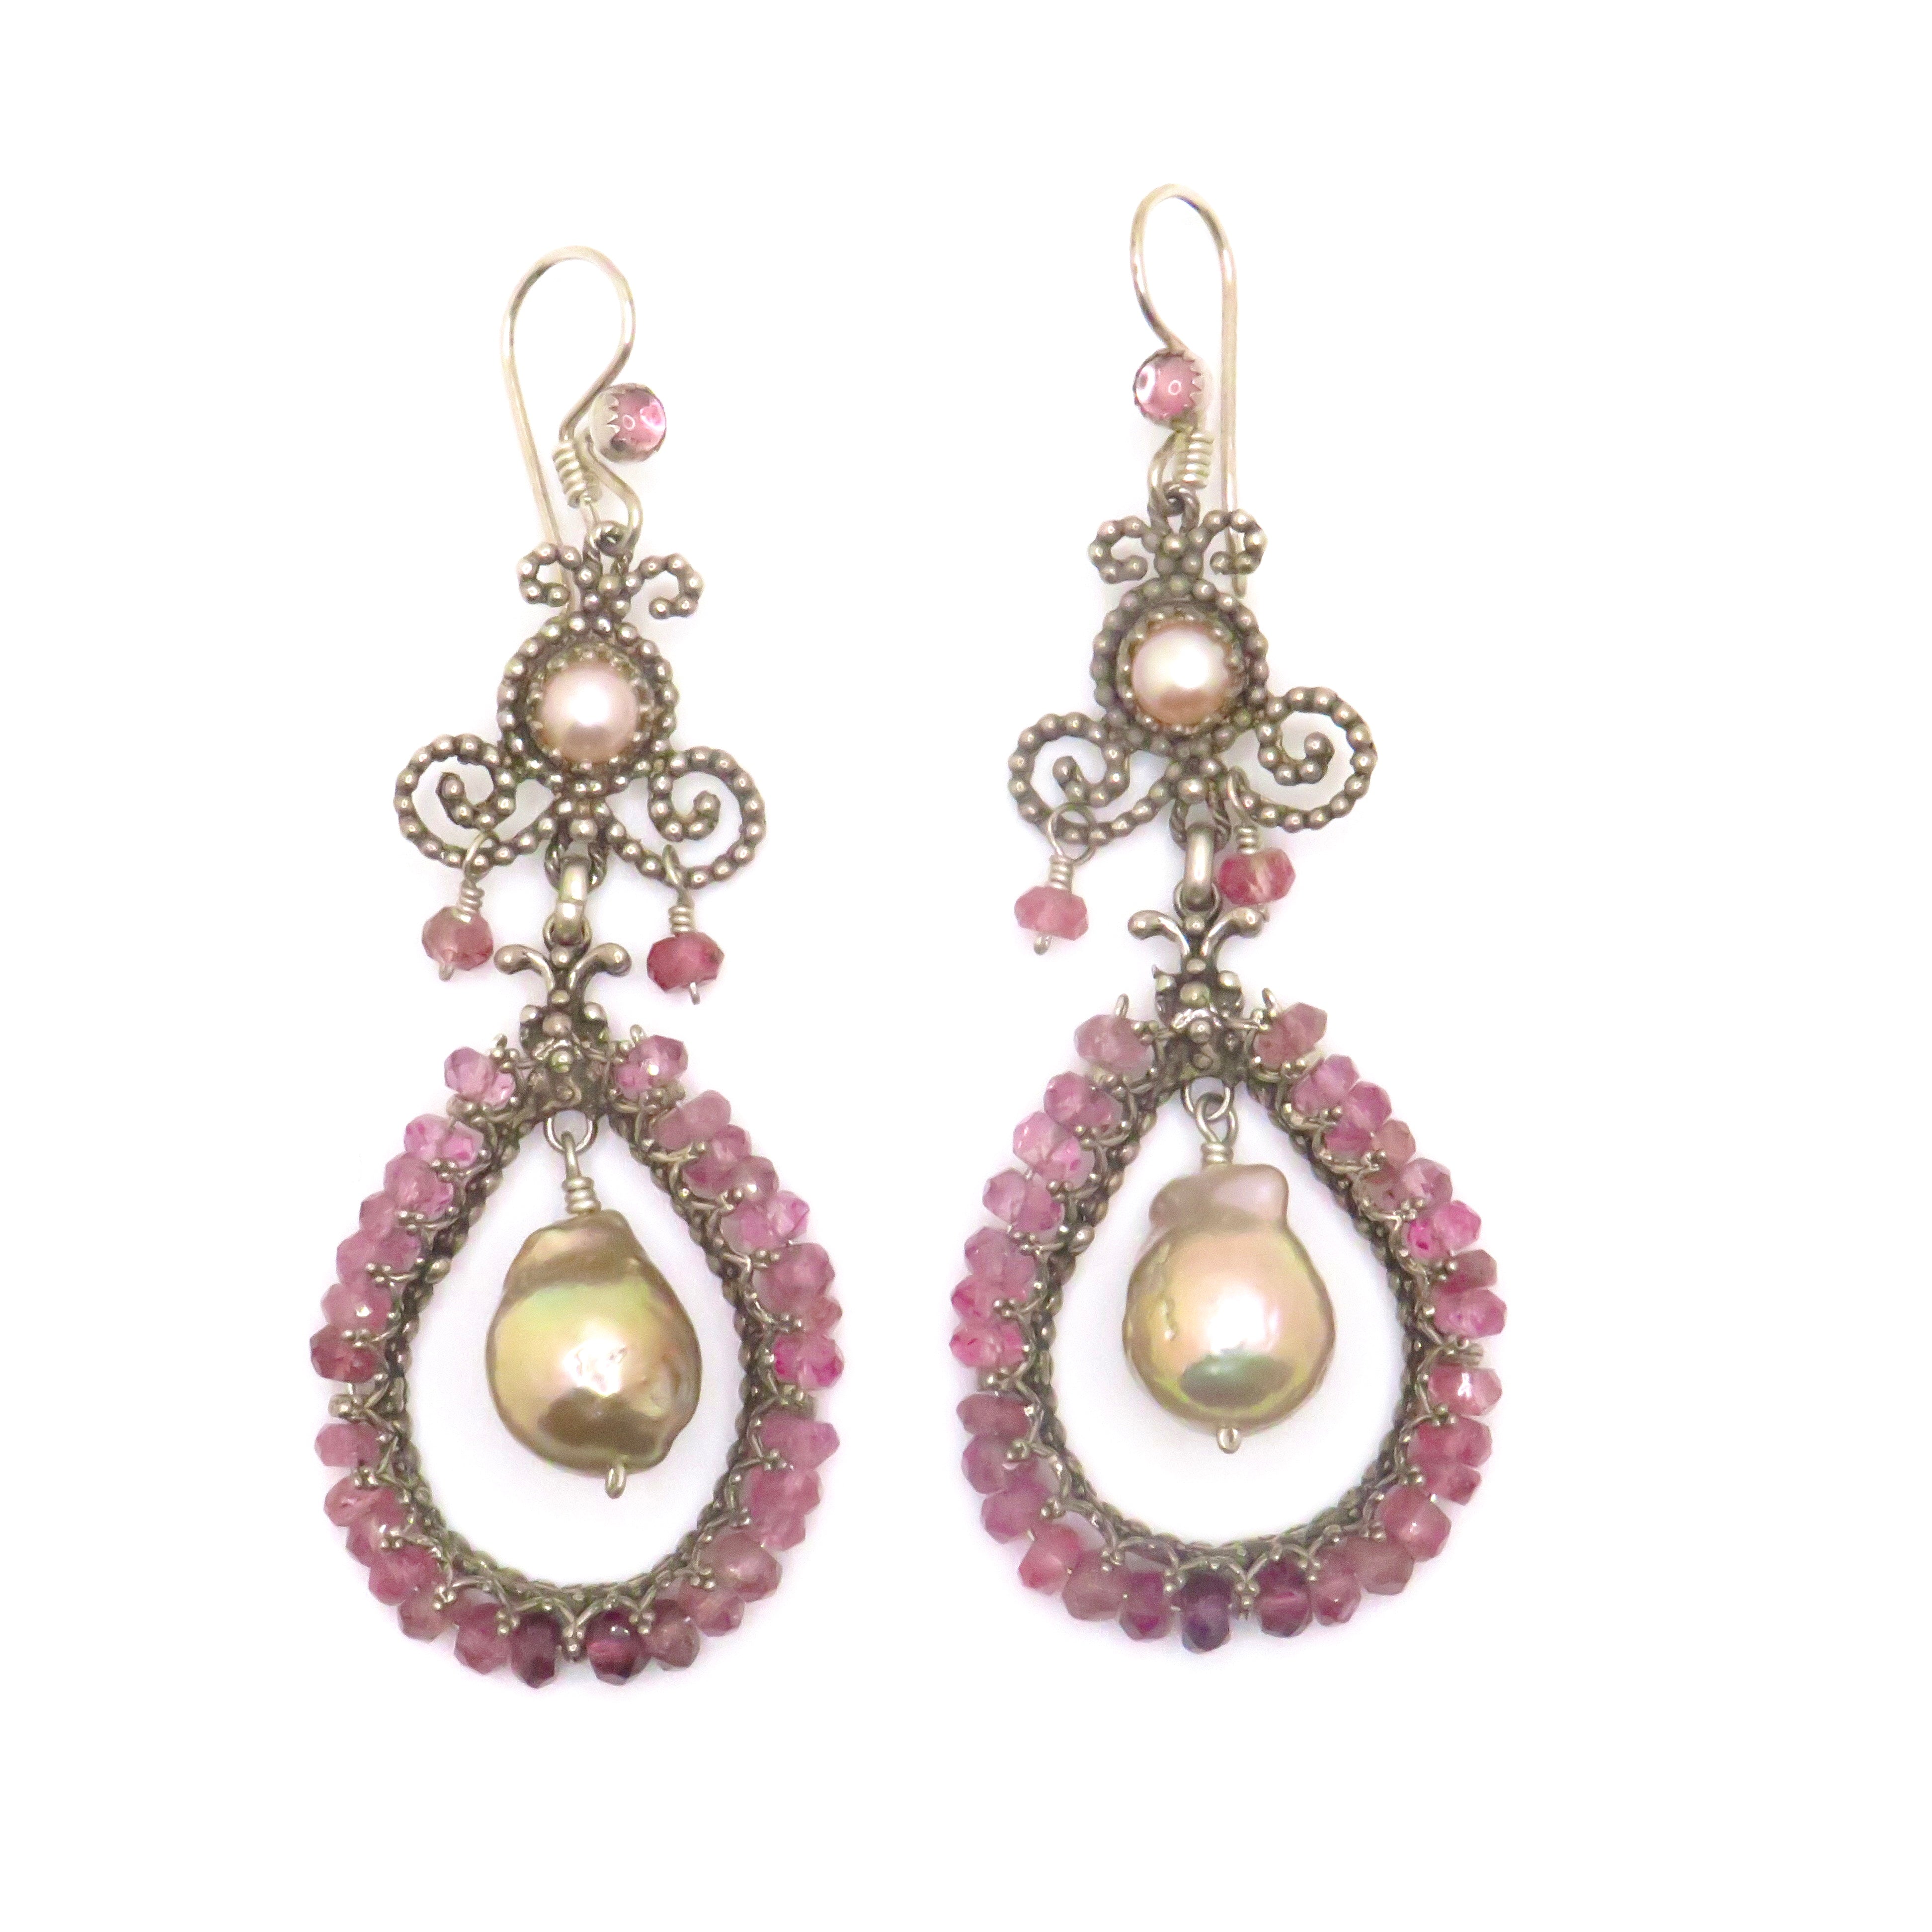 gemstone drop earrings with pink beads